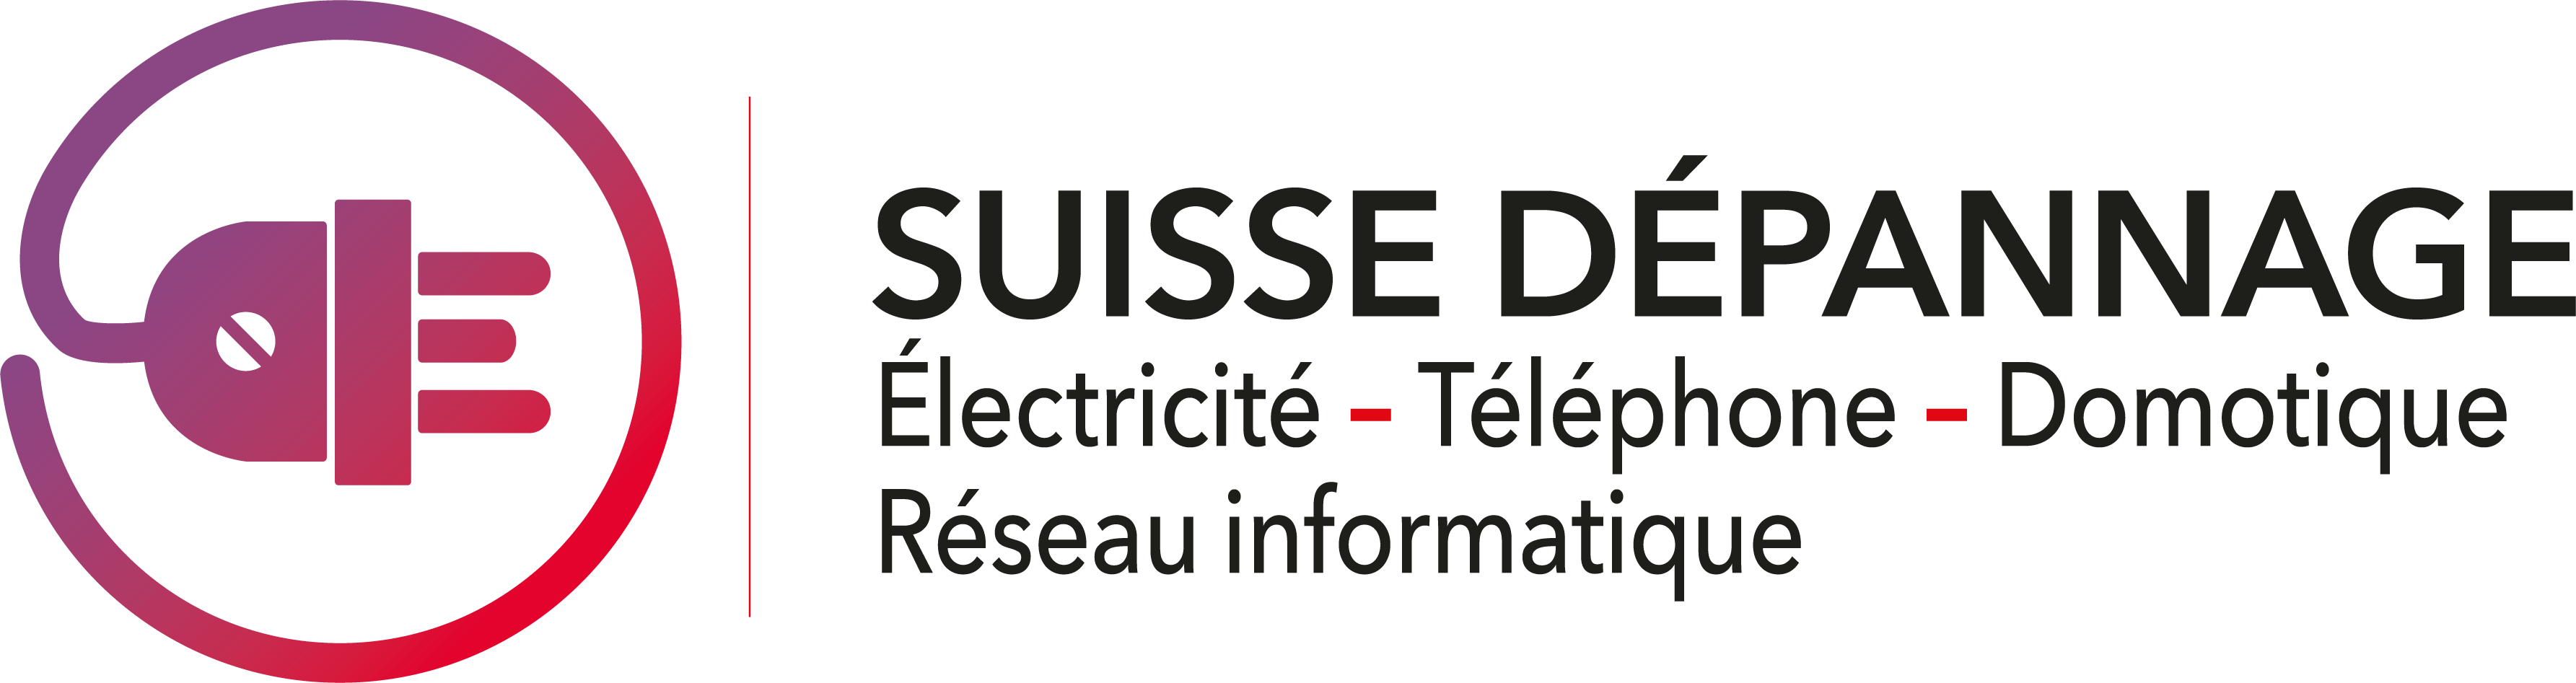 logo-suisse-depannage